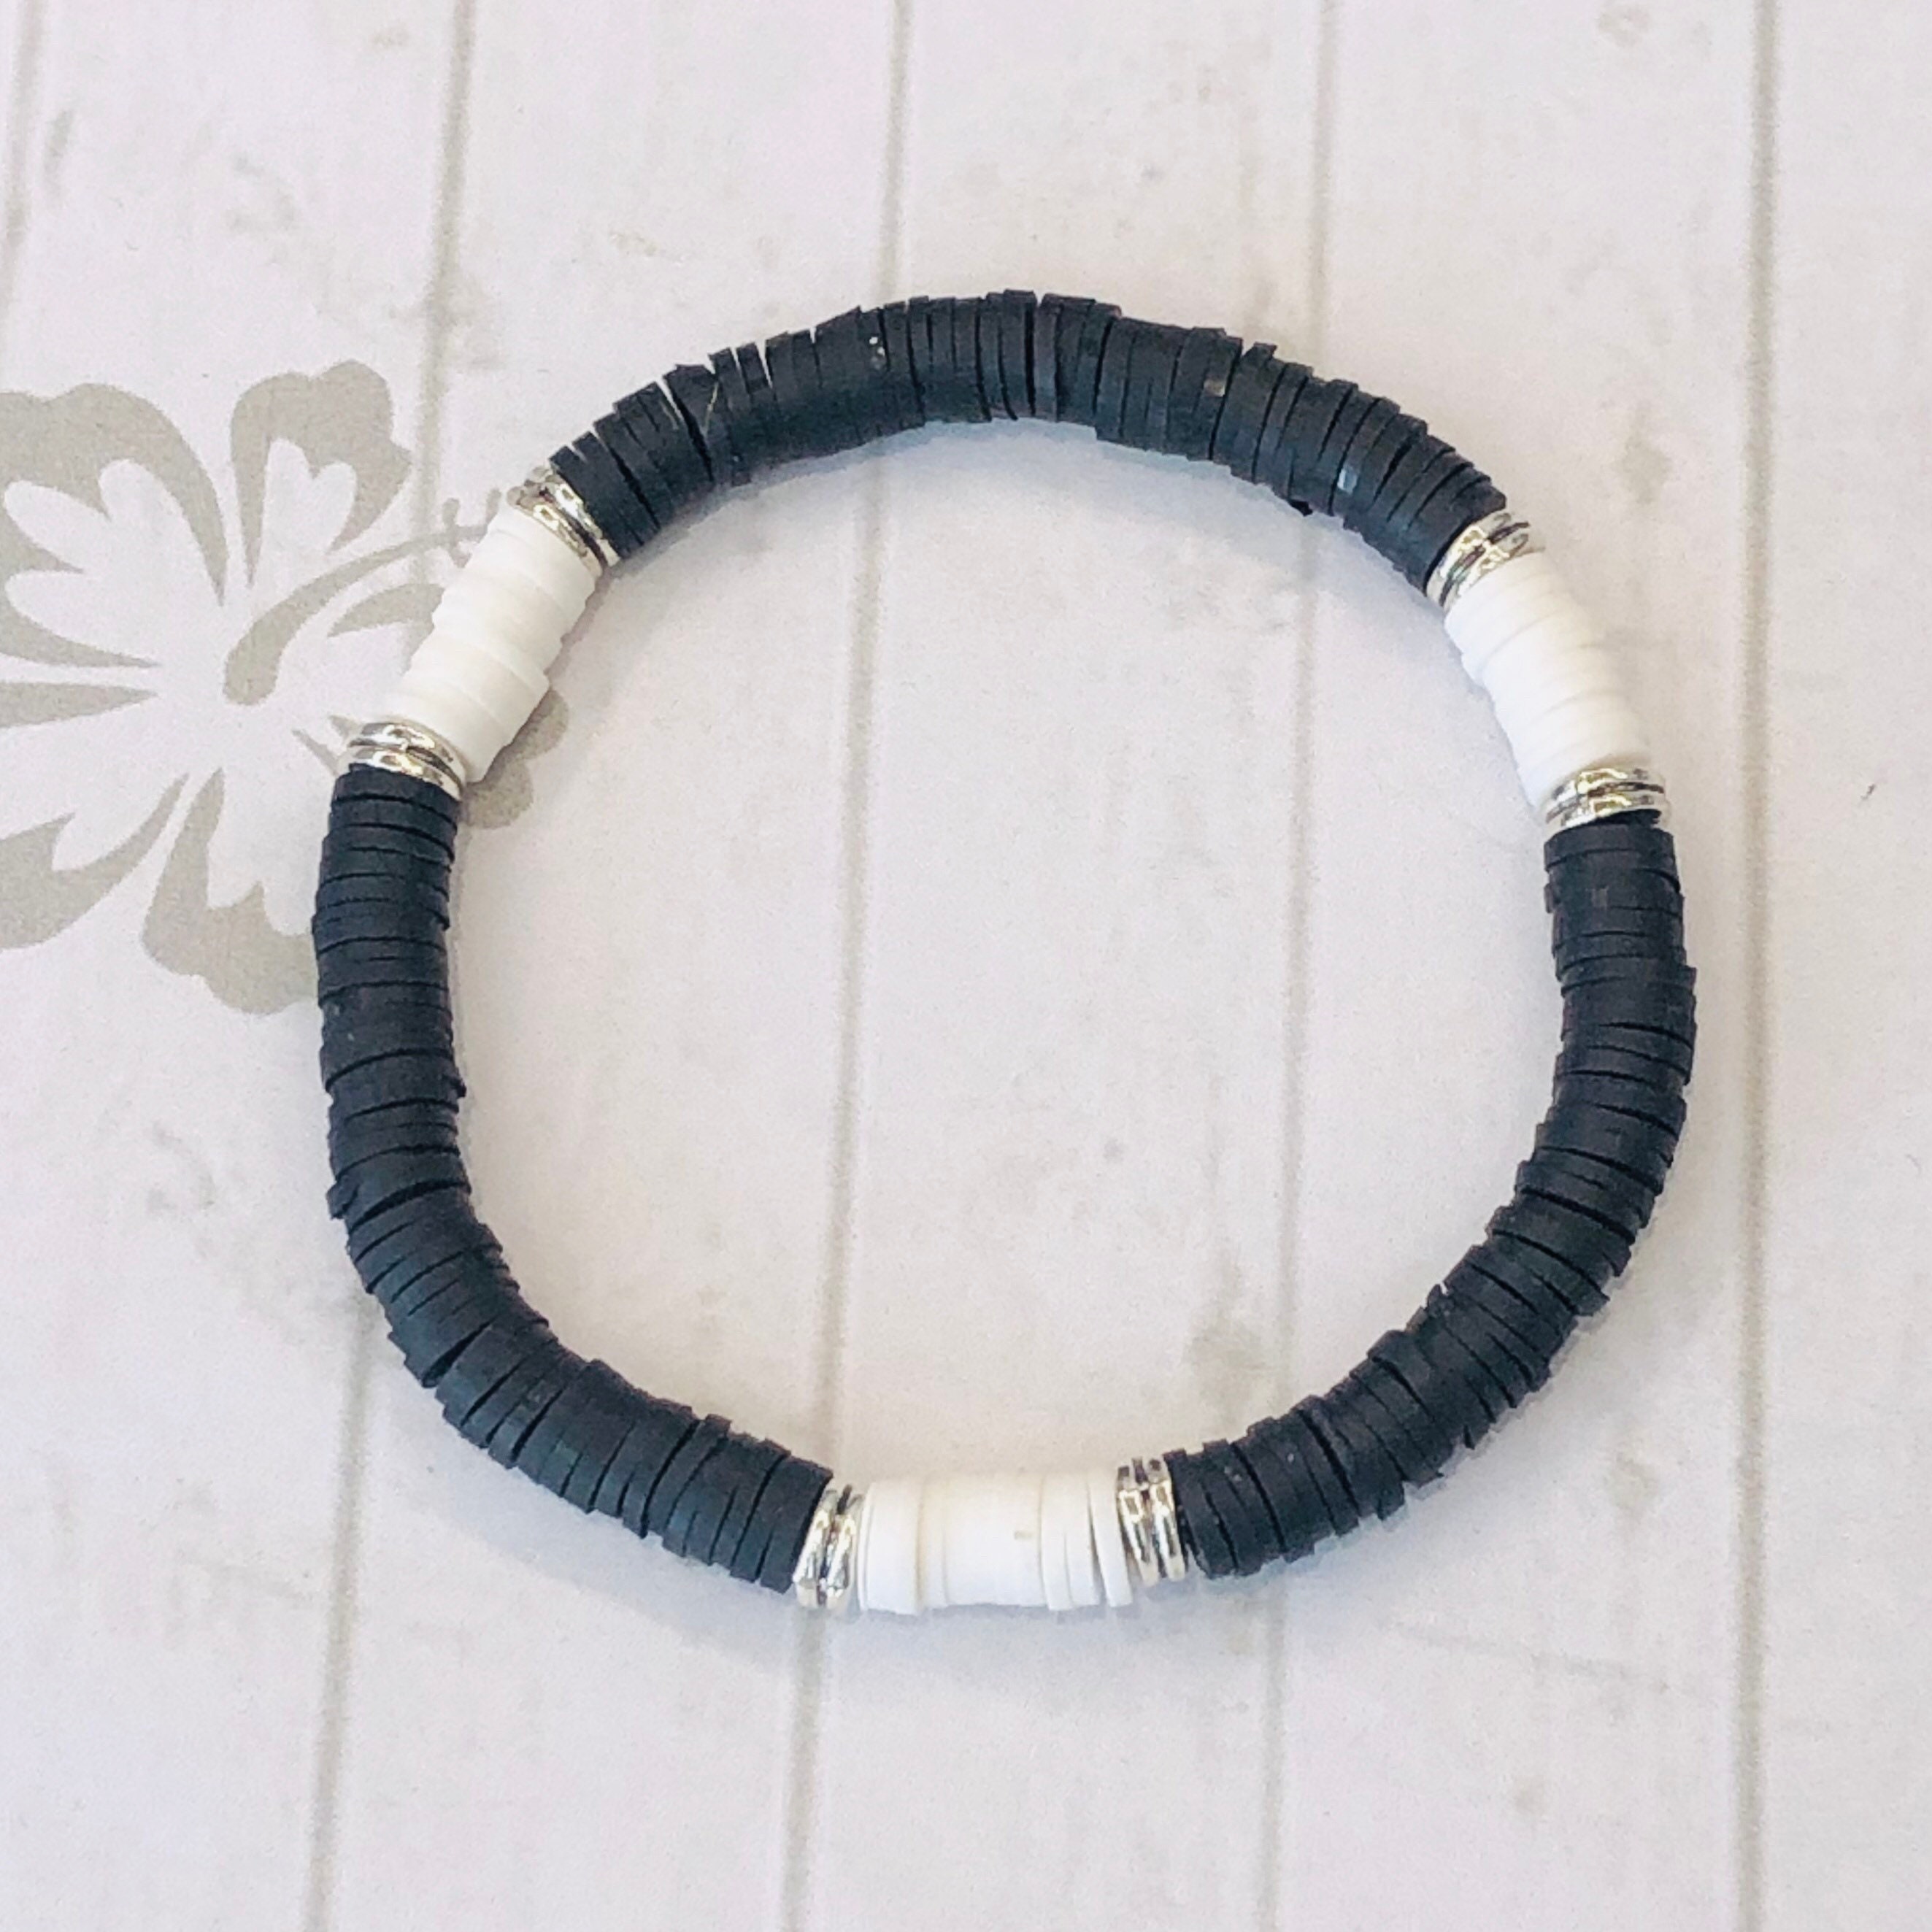 2530 PCS Clay Beads Bracelet Making Kit, Black and White Clay Beads,  Friendship Bracelet Kit, 2 Rolls of 10 Meters Black and White Elastic Rope,  7MM